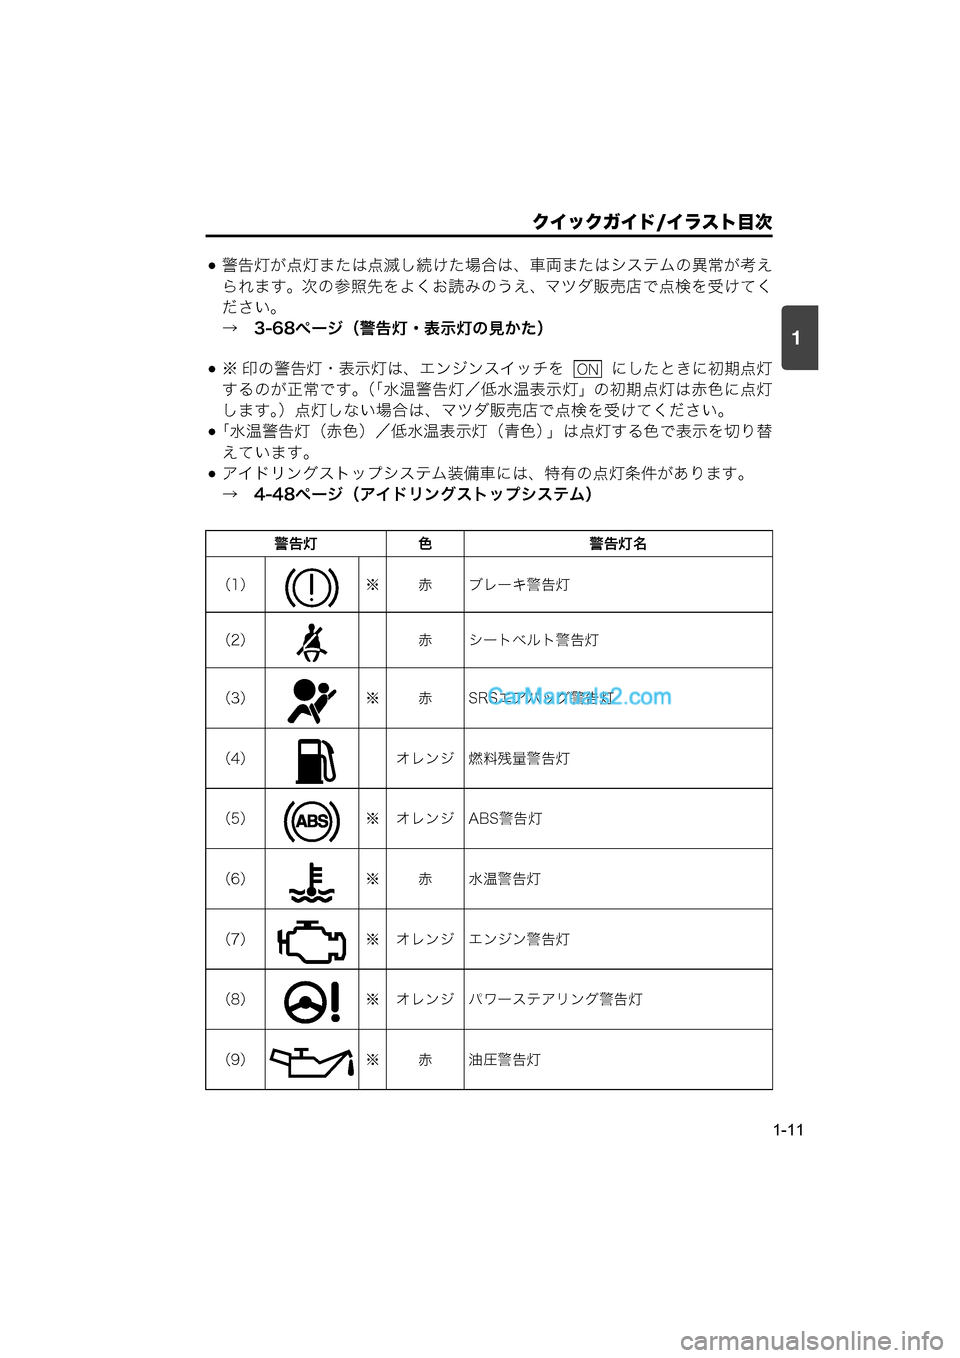 MAZDA MODEL CARROL 2015  取扱説明書 (キャロル) (in Japanese) 1
クイックガイド/イラスト目次
1-11
警告灯が点灯または点滅し続けた場合は、車両またはシステムの異常が考え
られます。次の参照先をよくお読�